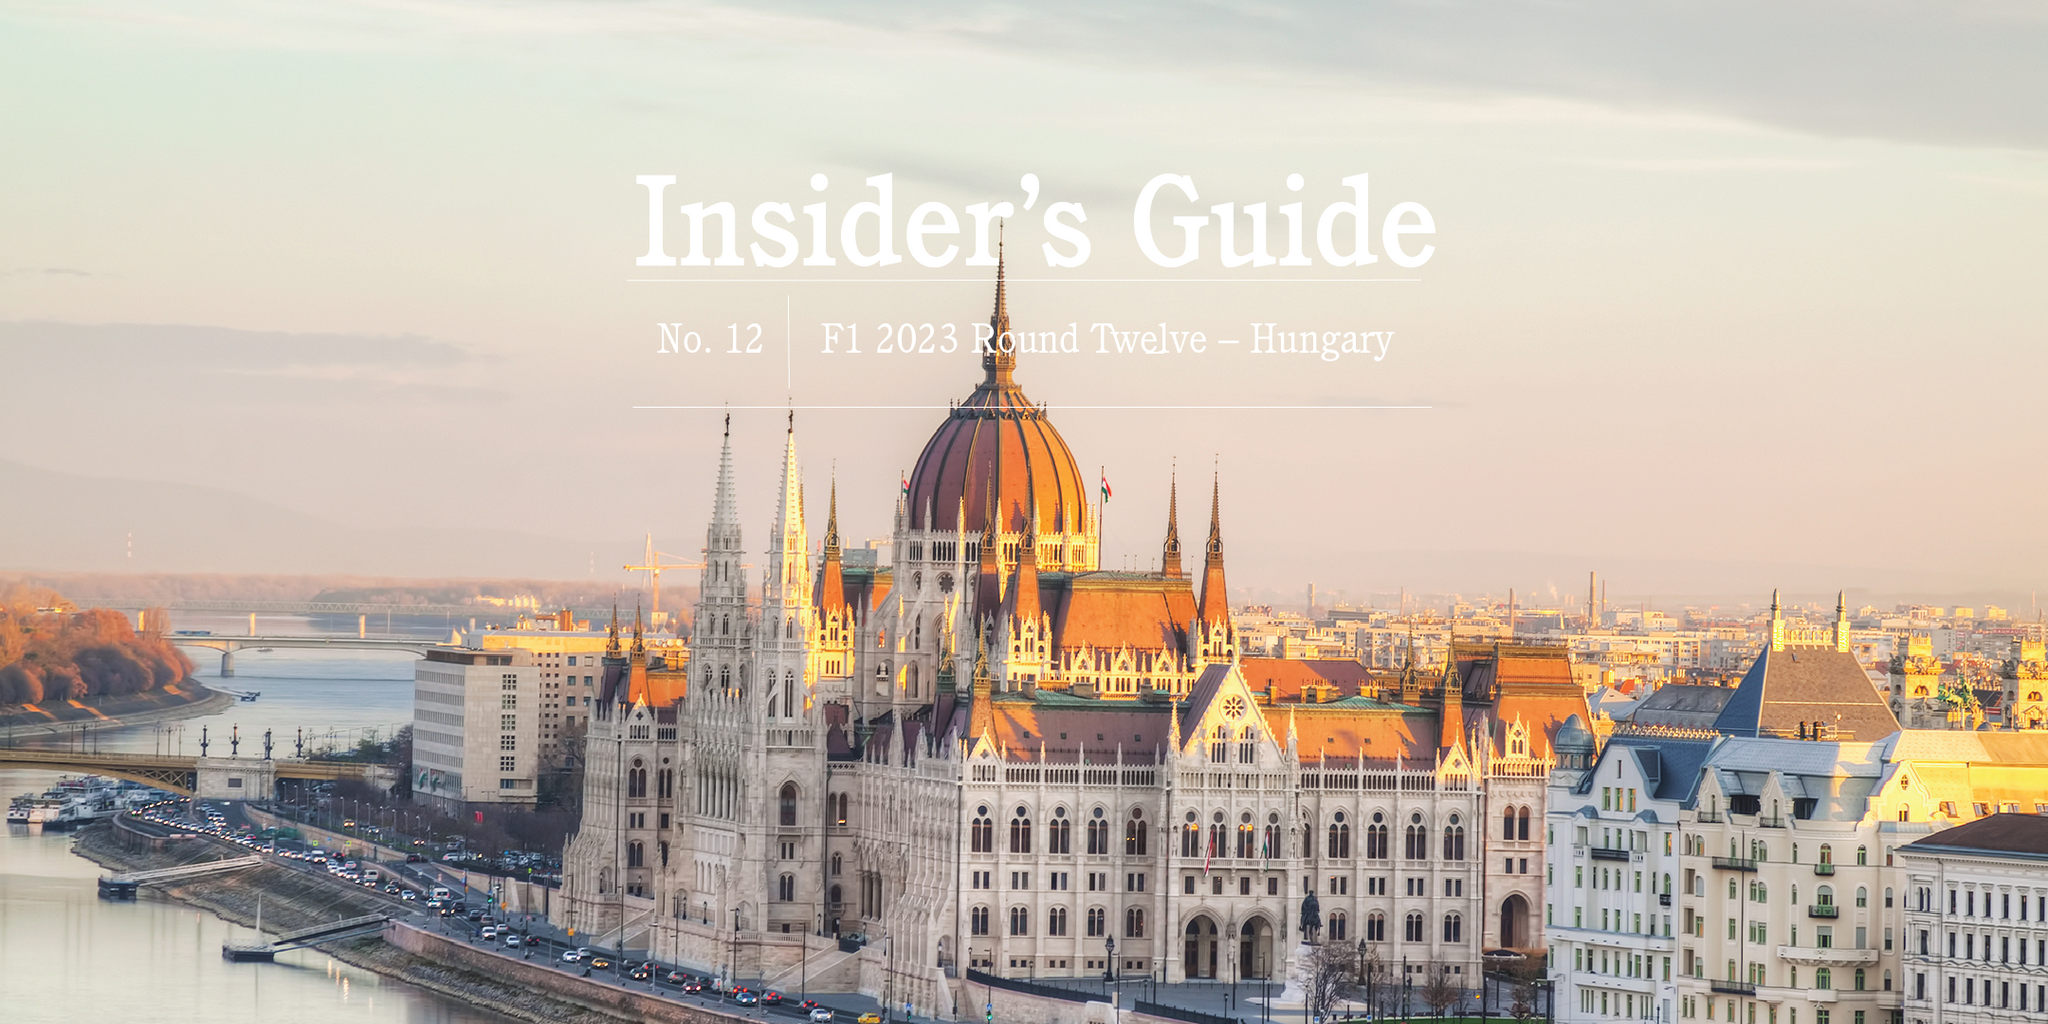 F1 2023 Insider's Guide No. 12 – Hungary